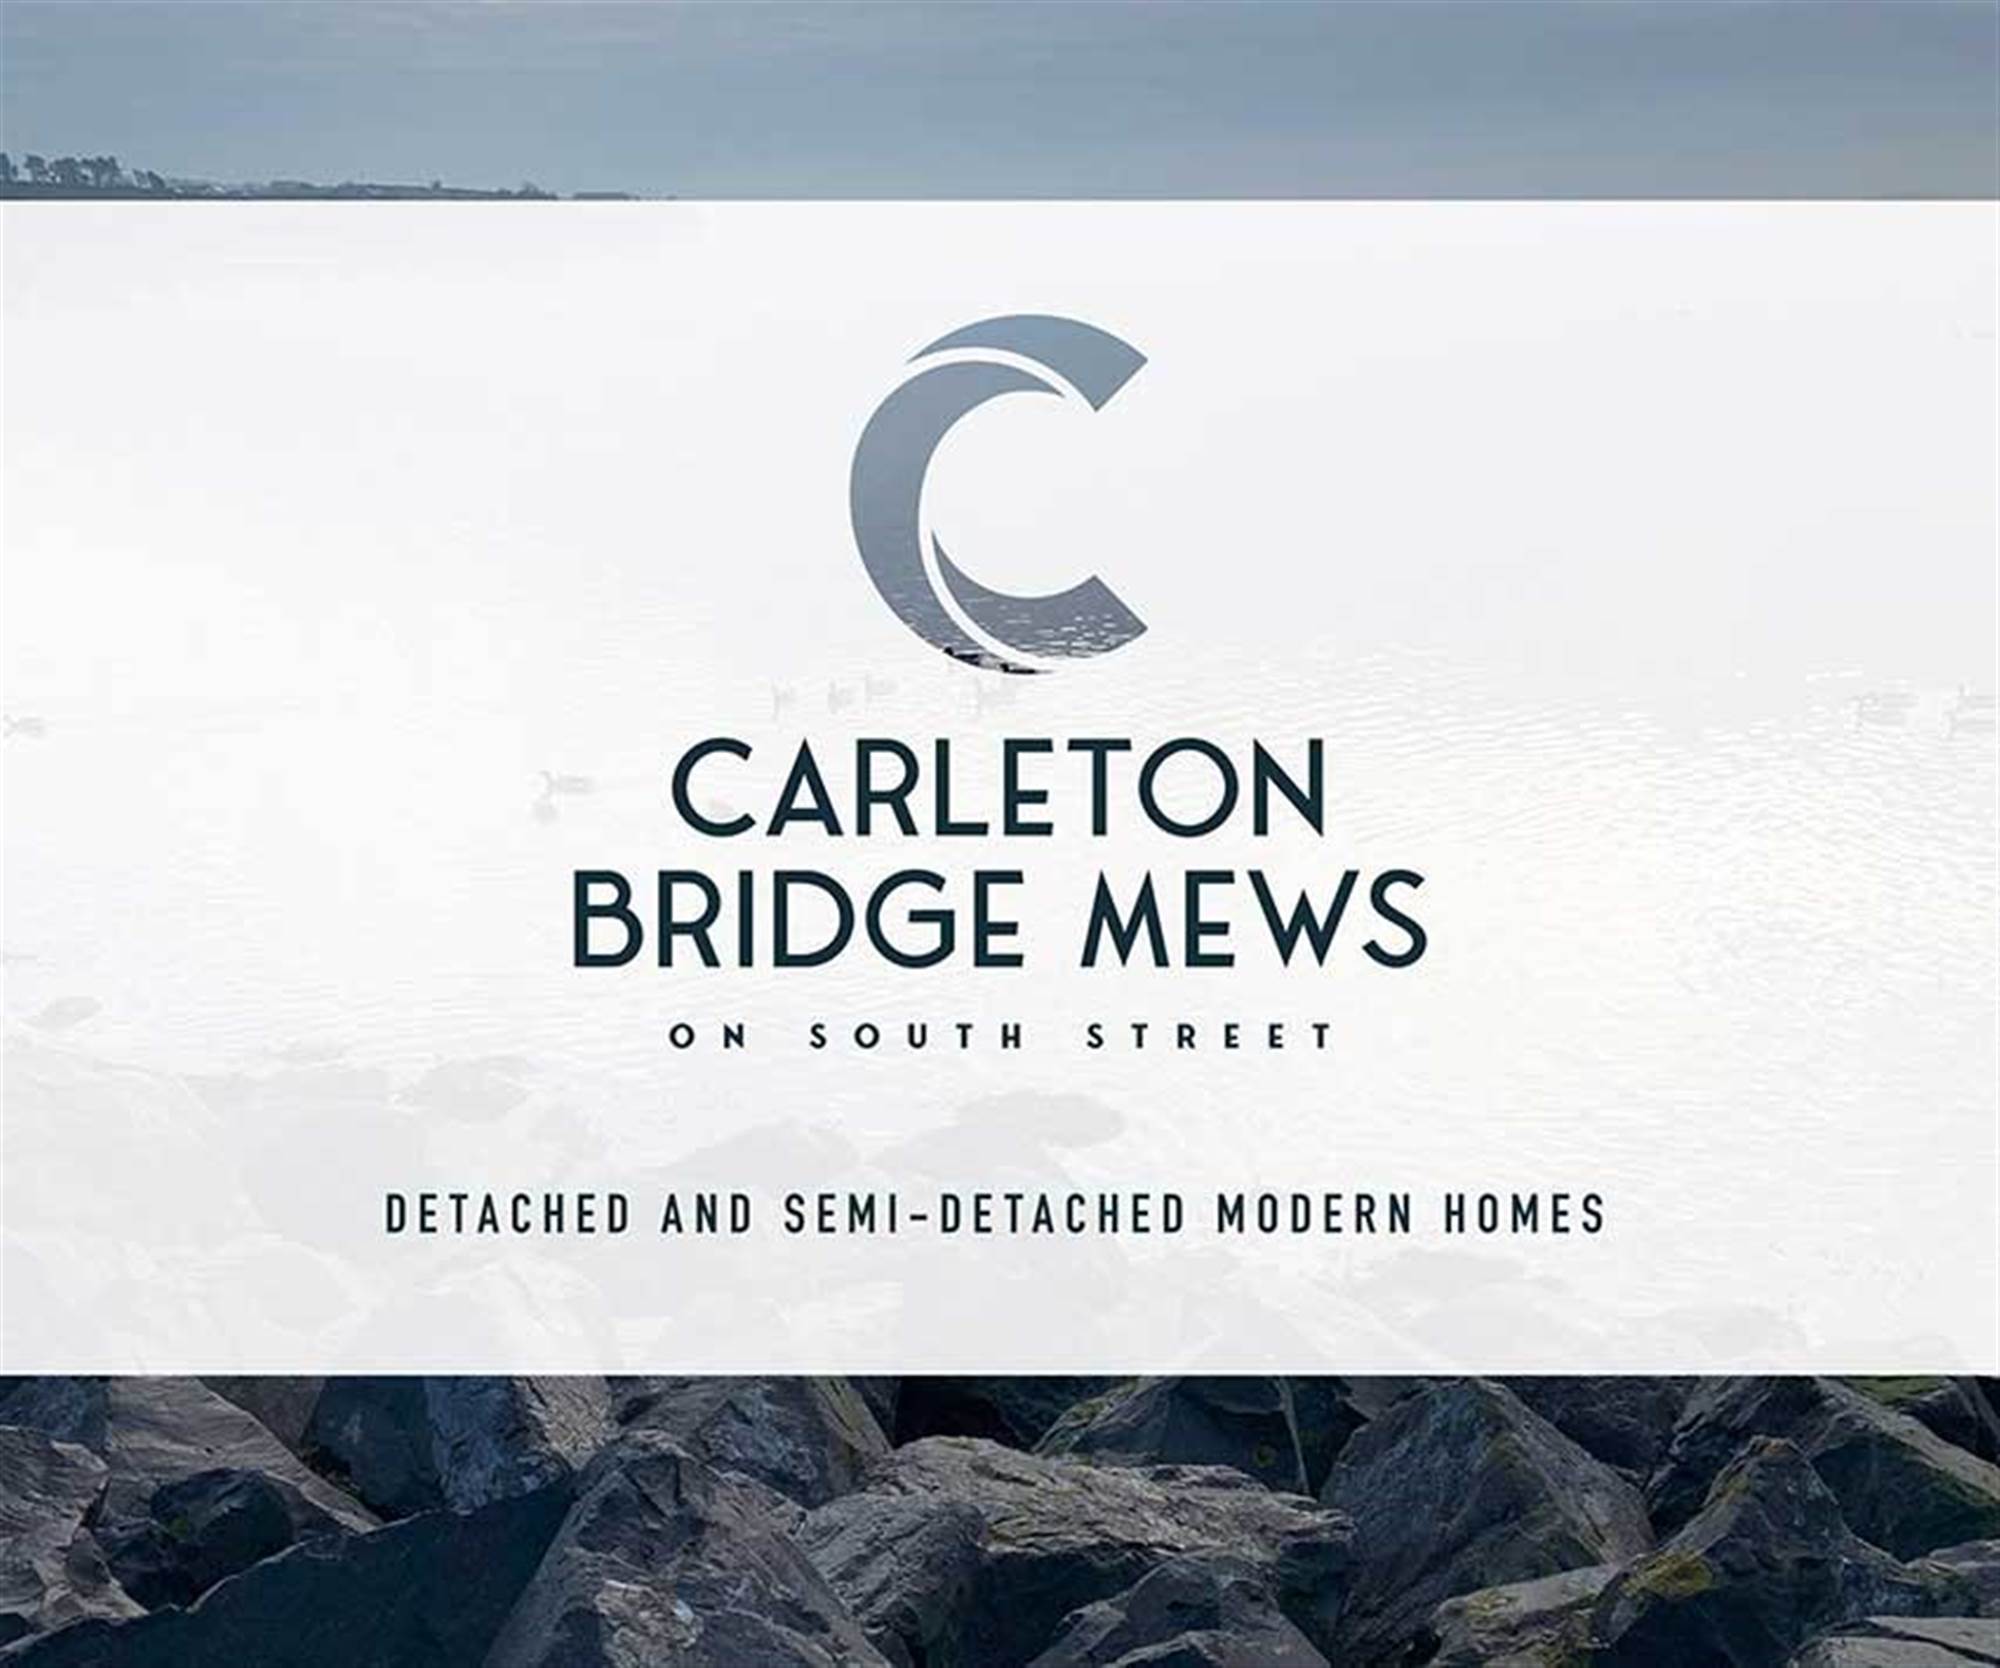 39 Carleton Bridge Mews